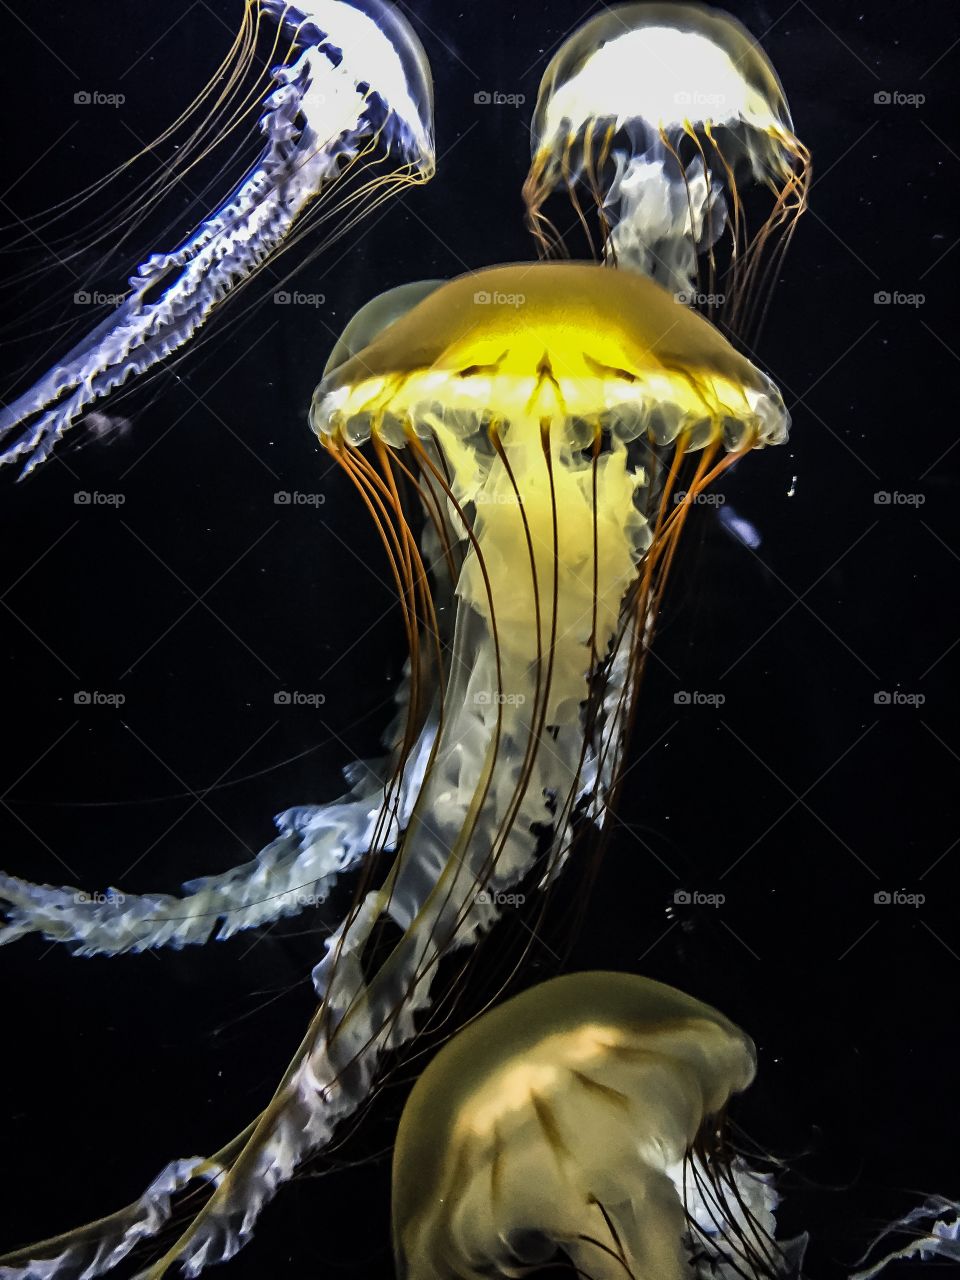 Jellyfish1

